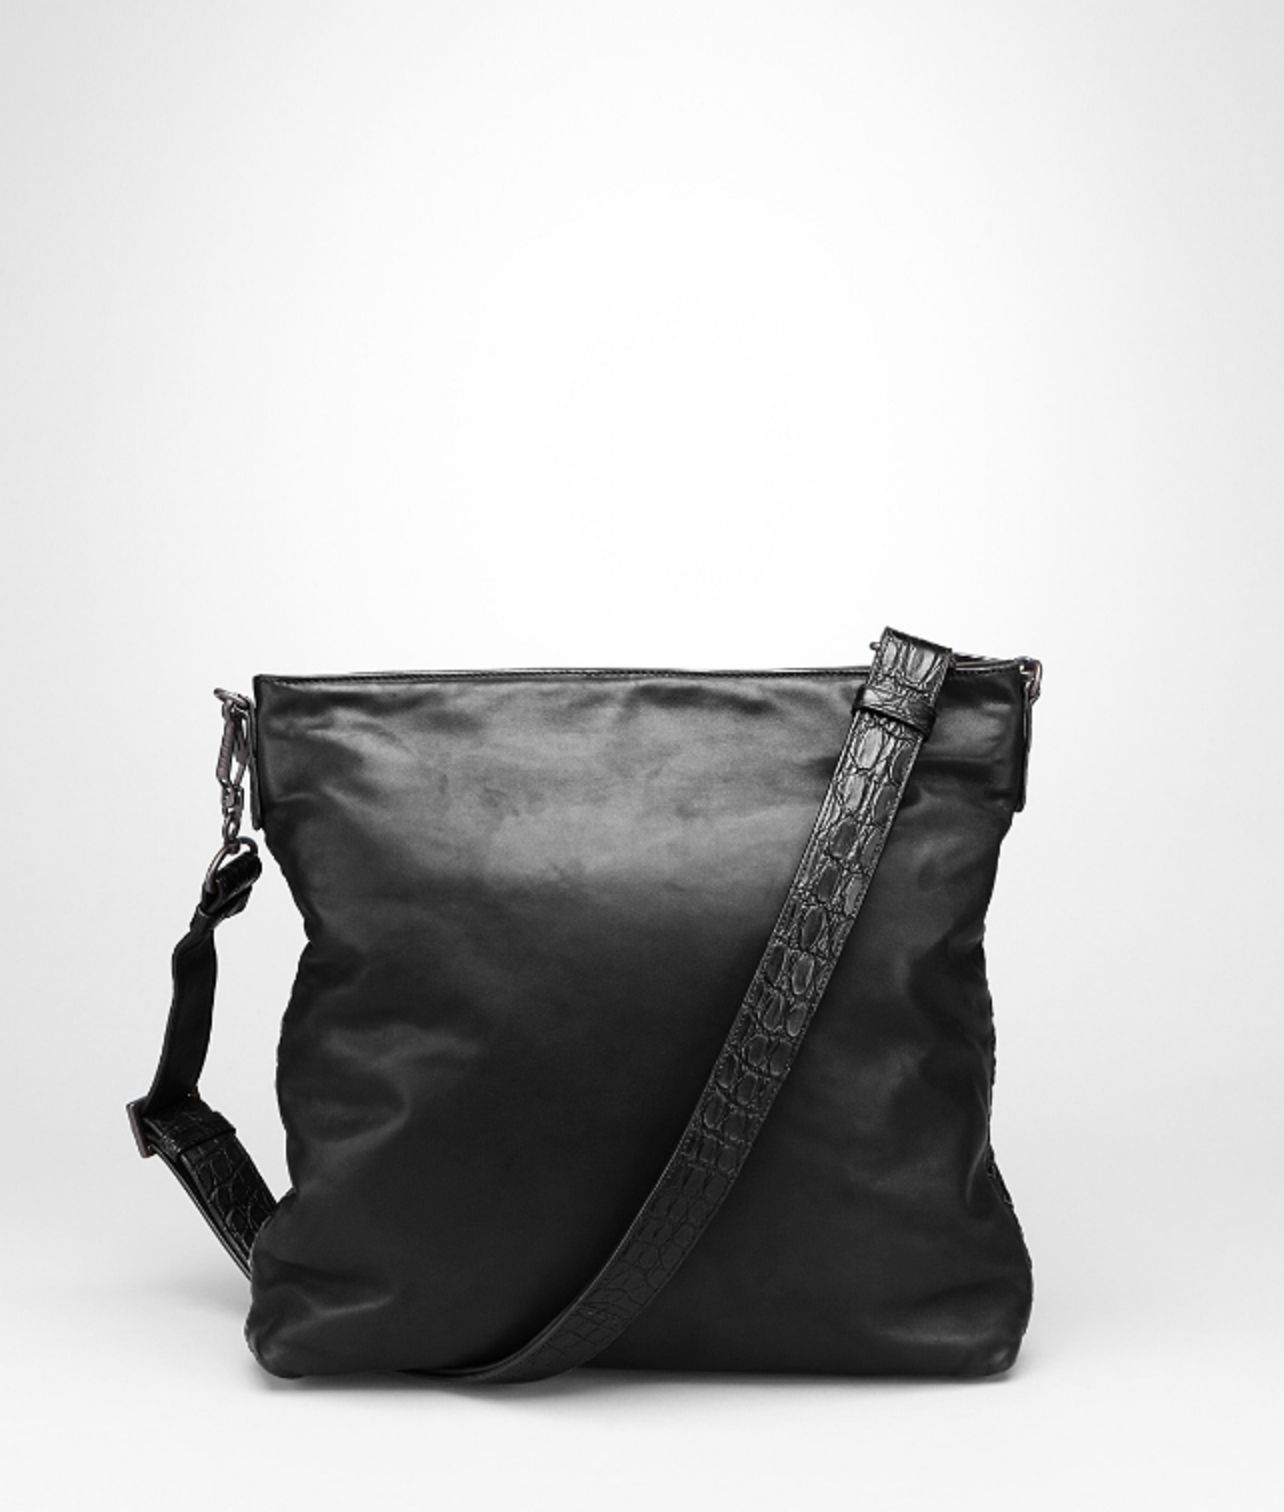 Bottega Veneta Nero Waxed Leather Soft Caiman Cross Body Bag in Black for Men - Lyst